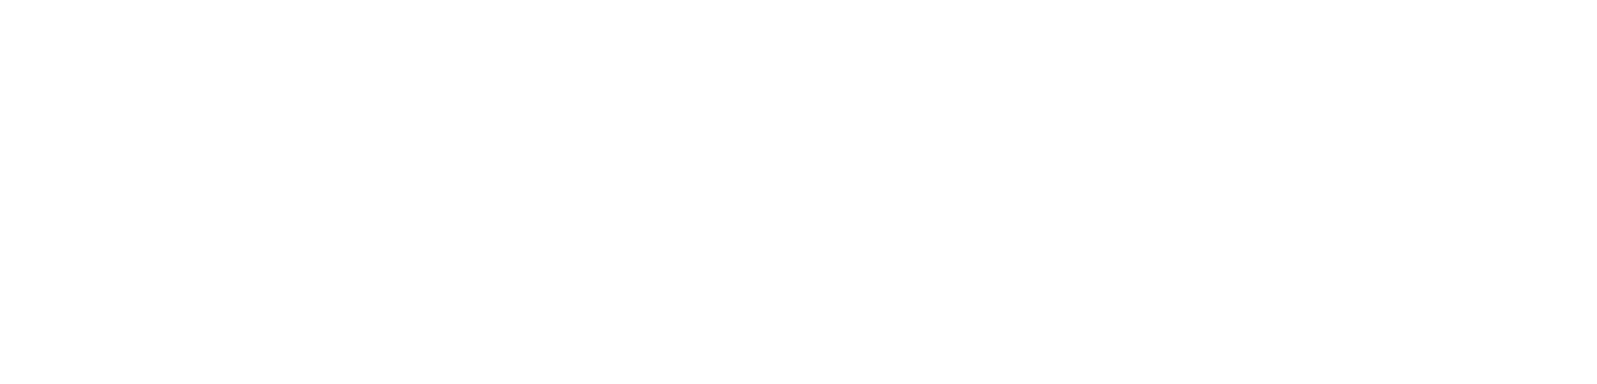 Ironwood Pharmaceuticals
 Logo groß für dunkle Hintergründe (transparentes PNG)